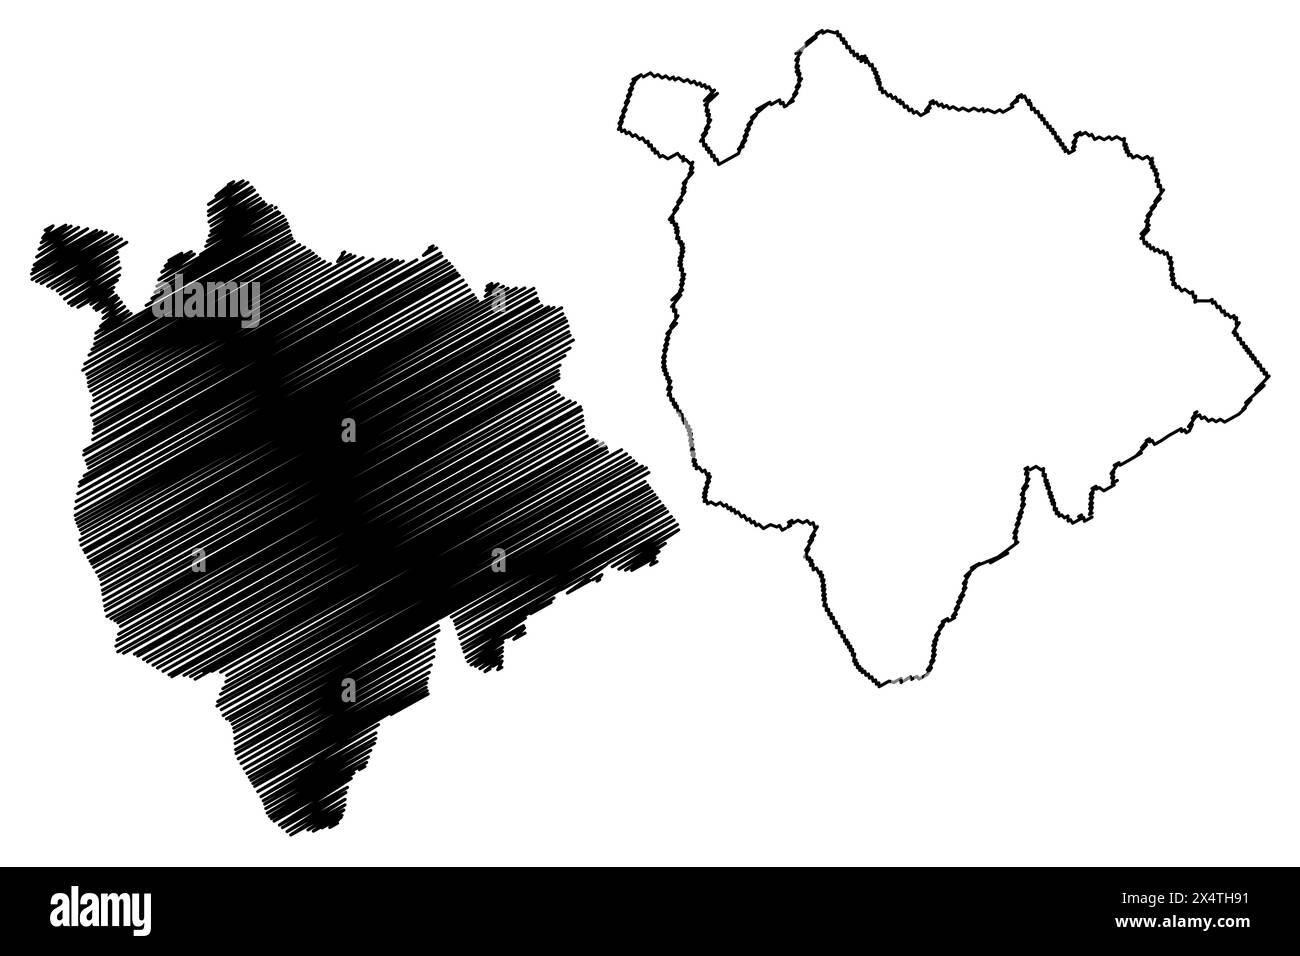 Mattersburg district (Republic of Austria or Österreich, Burgenland state) map vector illustration, scribble sketch Bezirk Mattersburg map Stock Vector